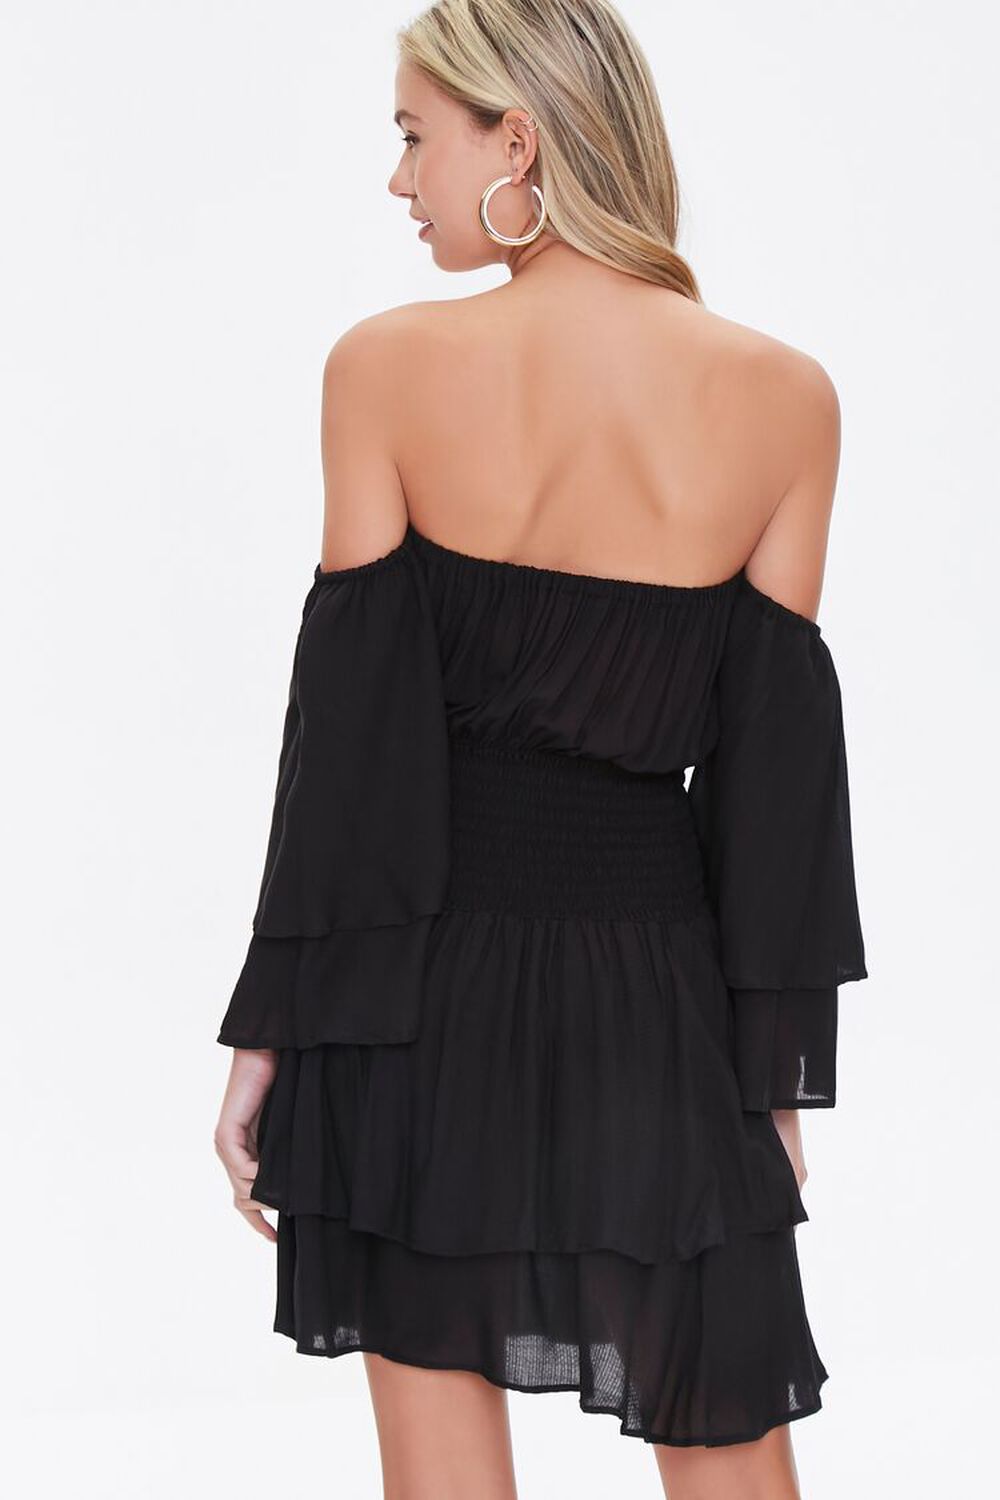 BLACK Tiered Flounce Mini Dress, image 3